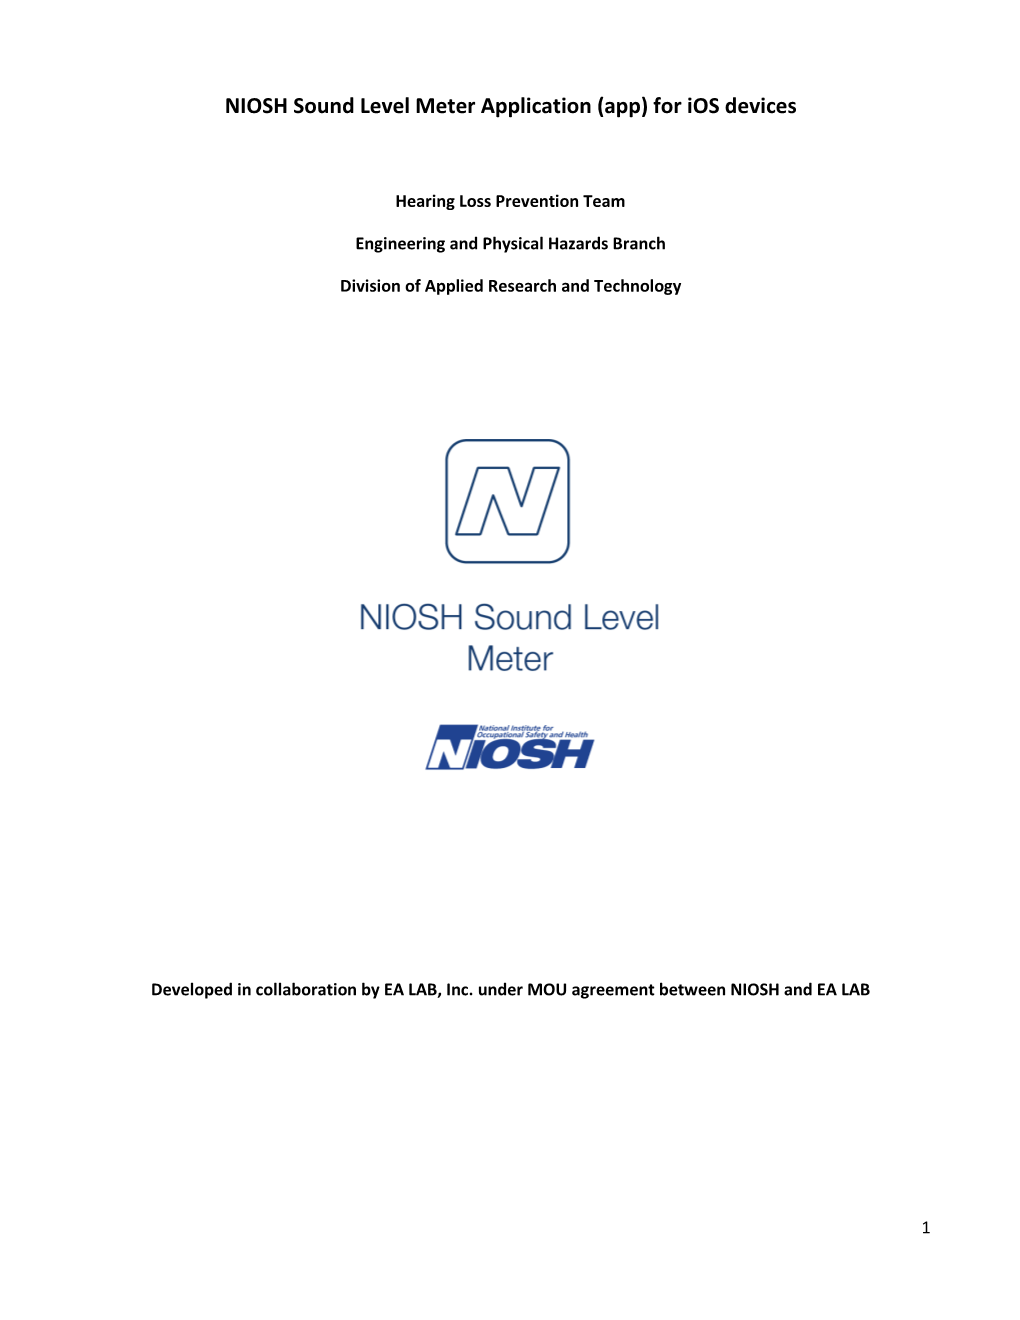 NIOSH Sound Level Meter Application (App) for Ios Devices